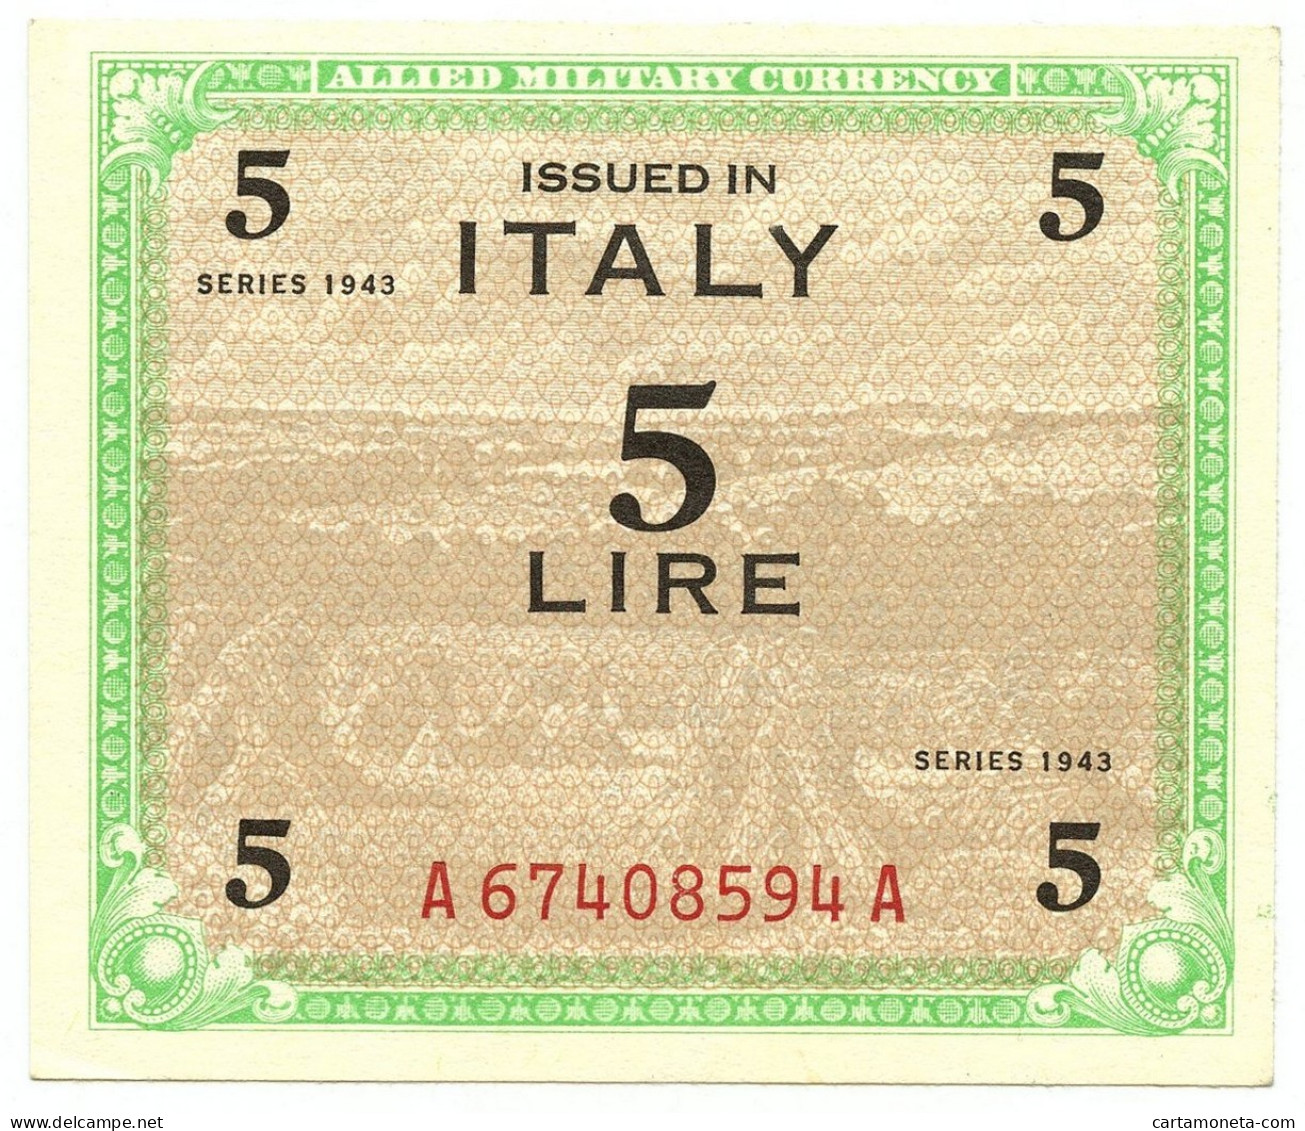 5 LIRE OCCUPAZIONE AMERICANA IN ITALIA MONOLINGUA FLC 1943 SUP+ - Ocupación Aliados Segunda Guerra Mundial